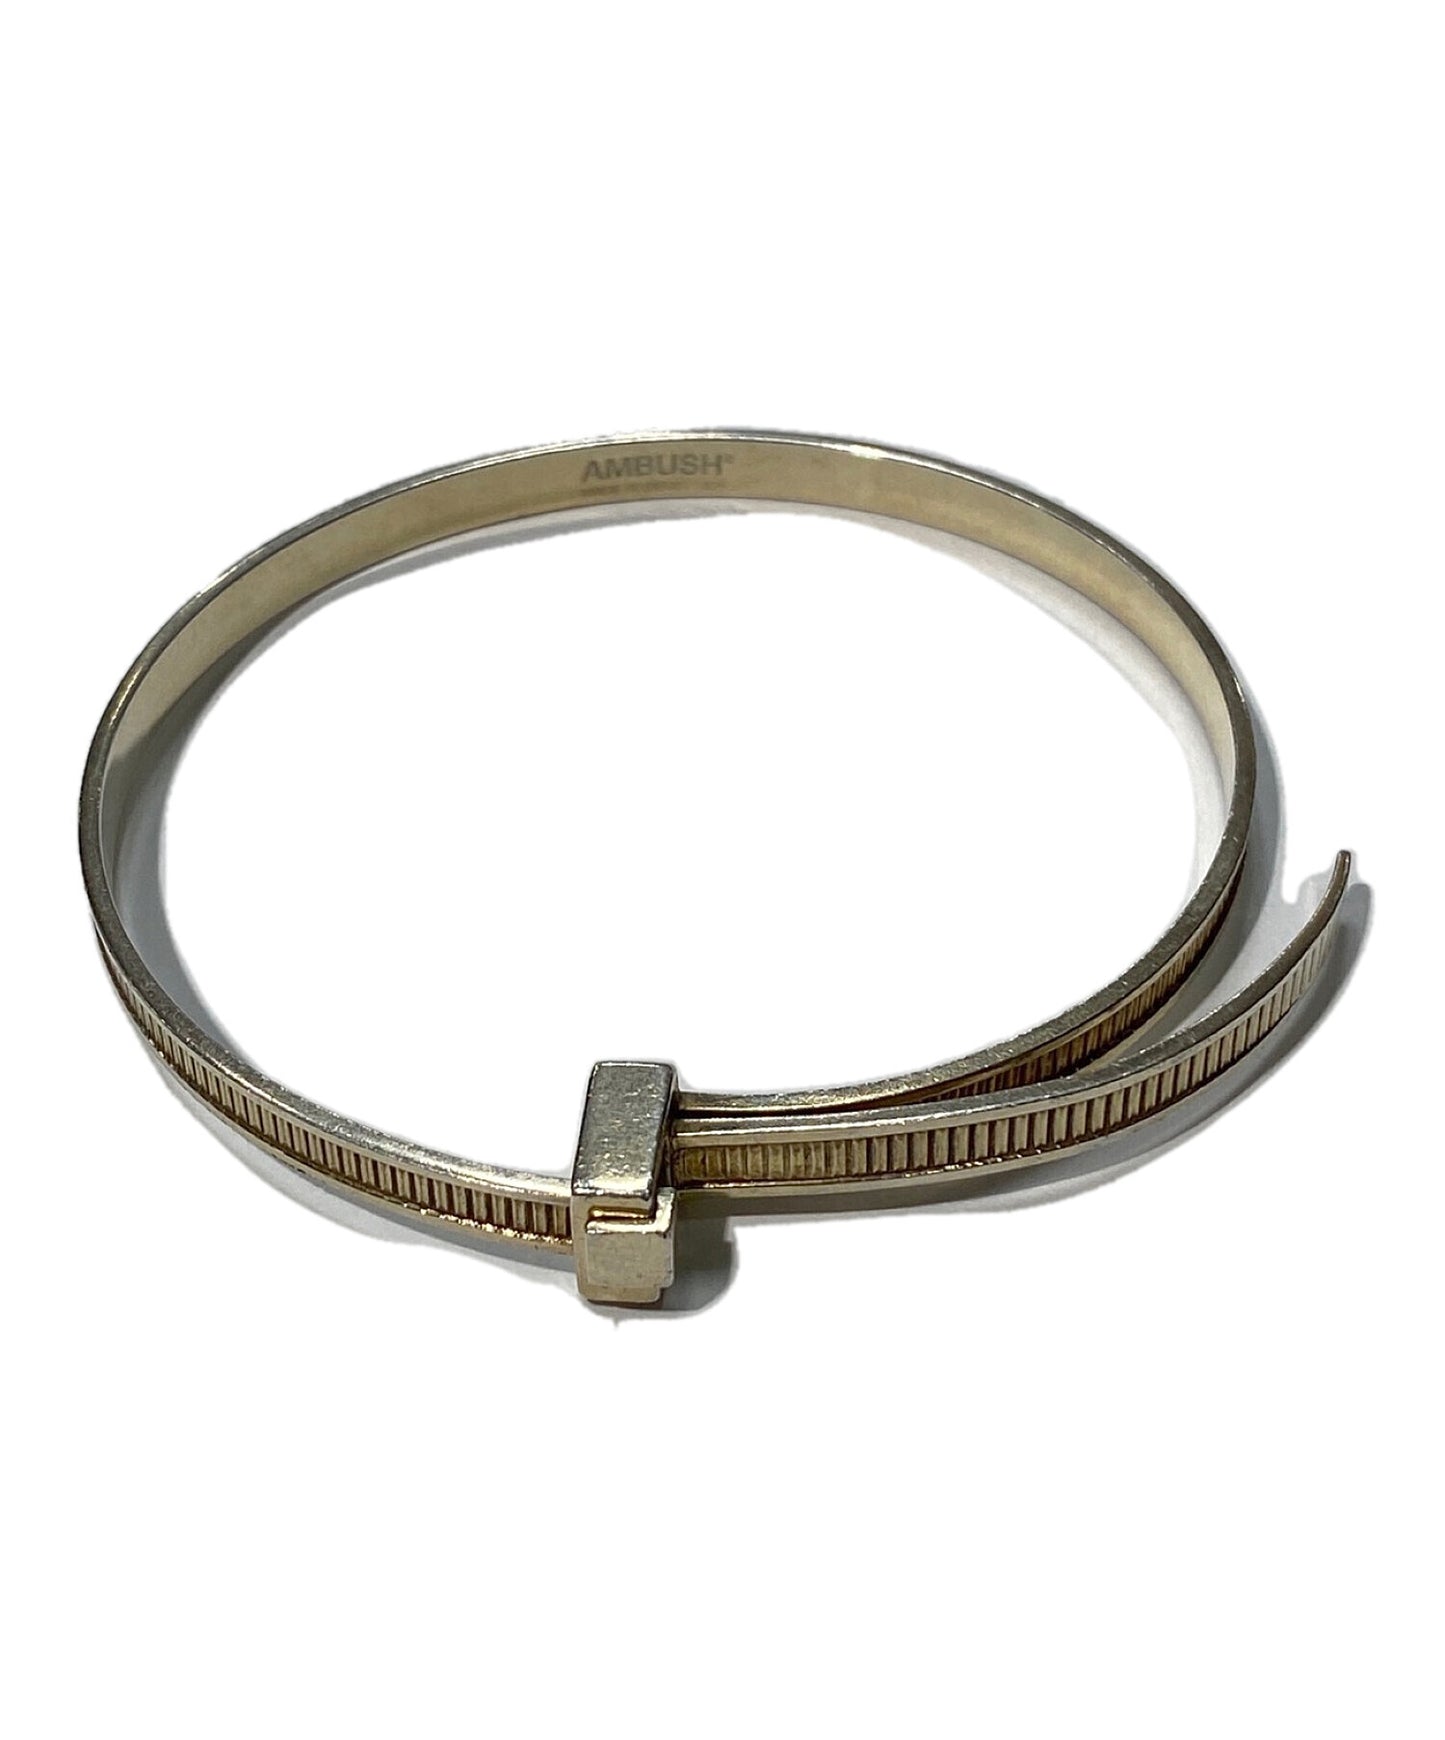 ambush Chain bracelet with spheres available on theapartmentcosenzacom   8785  MG